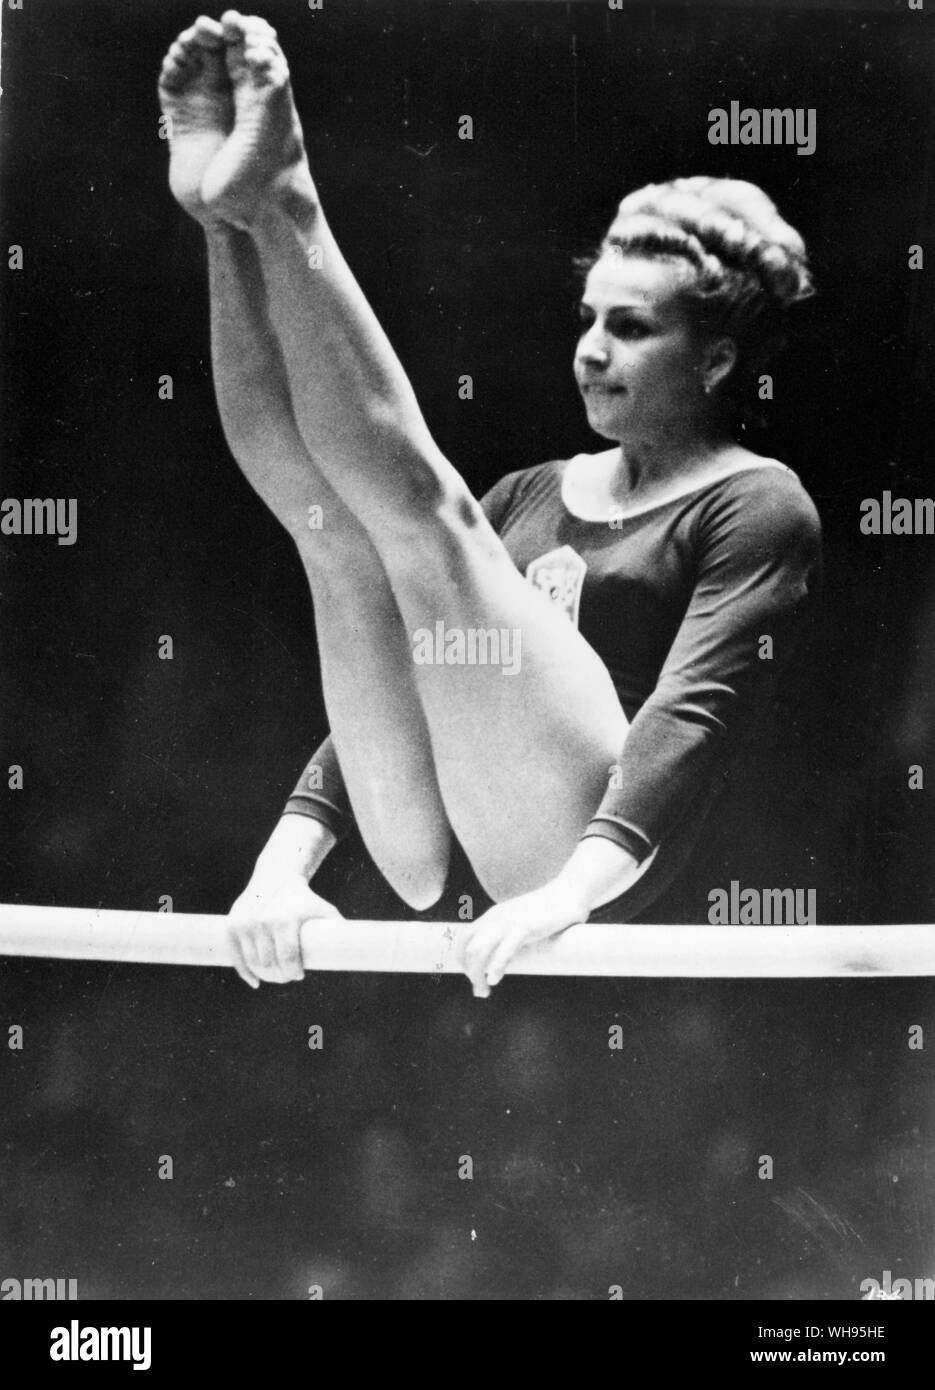 Japan, Tokyo Olympics, 1964: Vera Caslavska (Czechoslovakia). Olympic champion in the women's gymnastics. Stock Photo